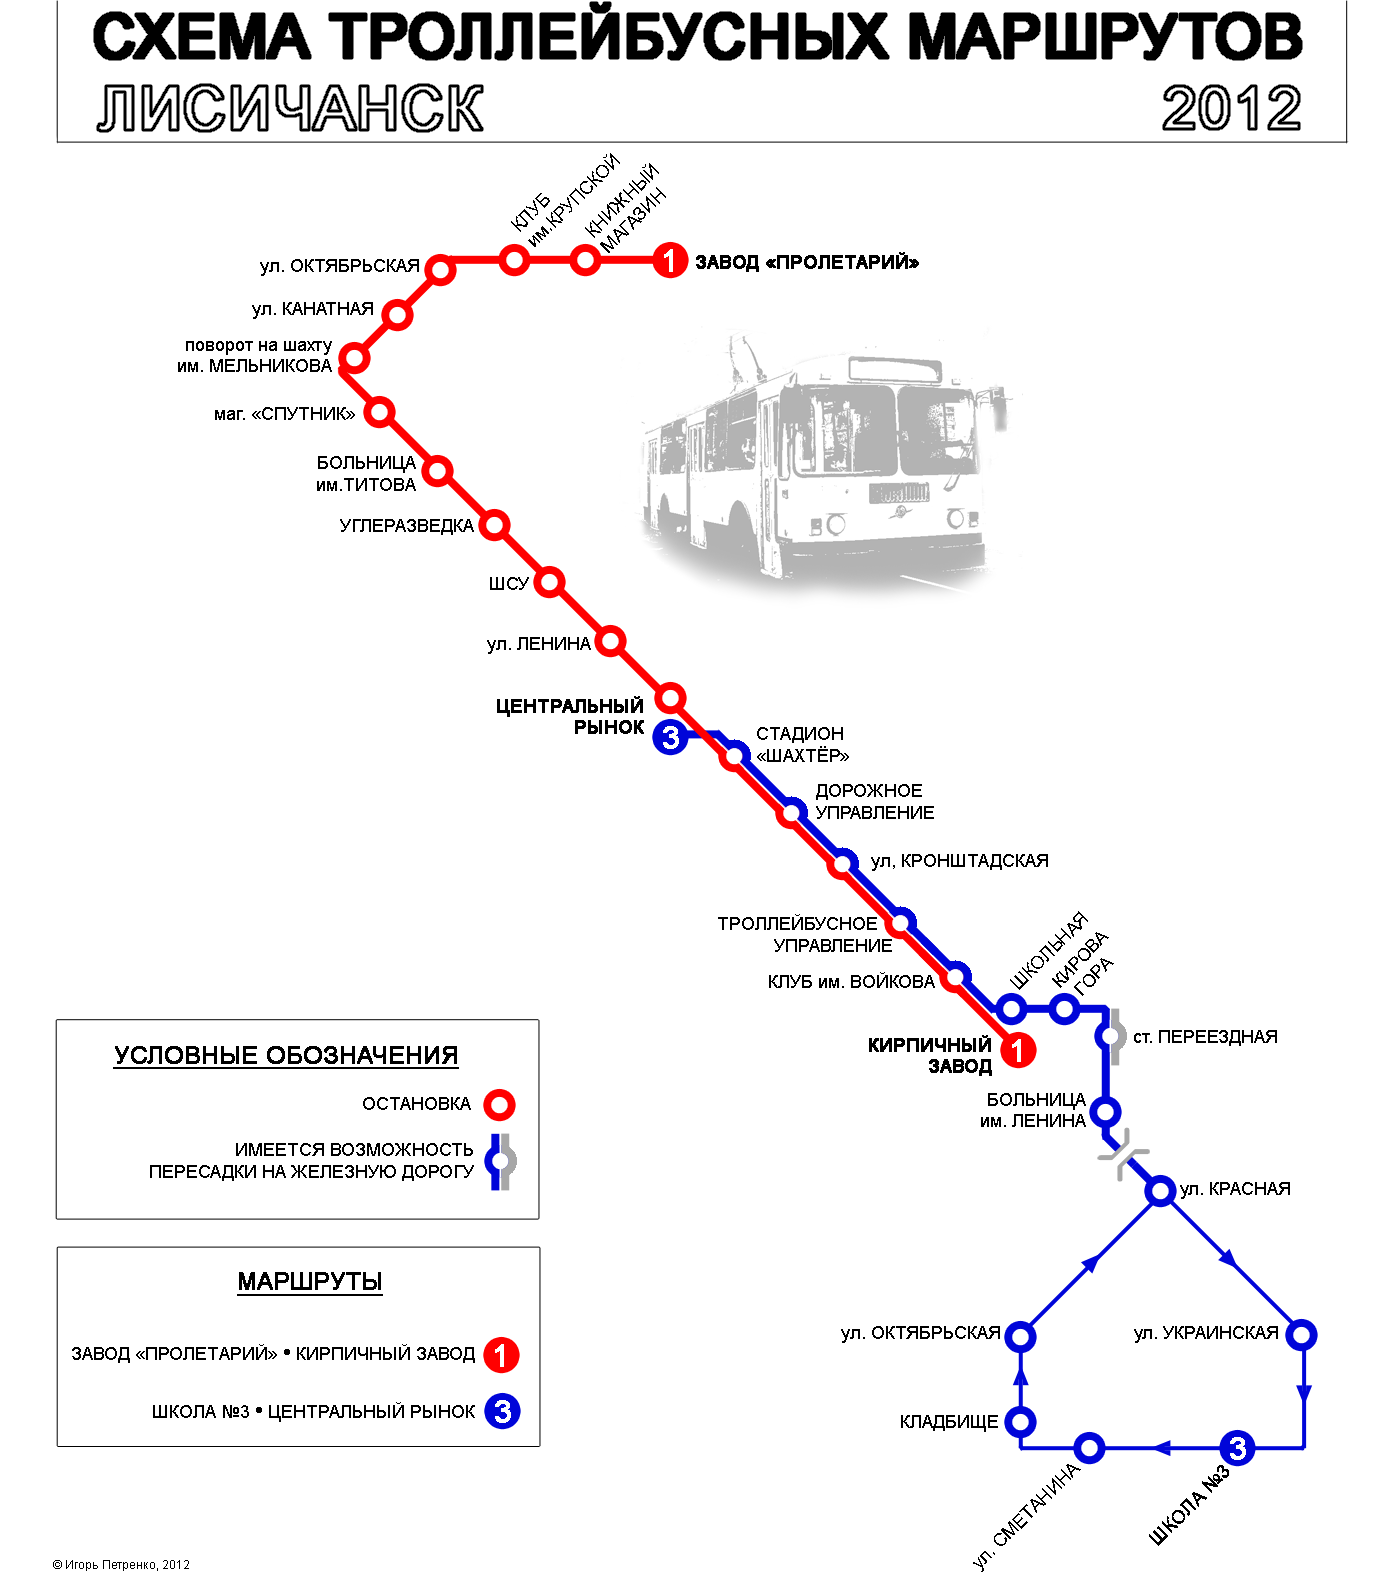 Liszicsanszk — Route maps